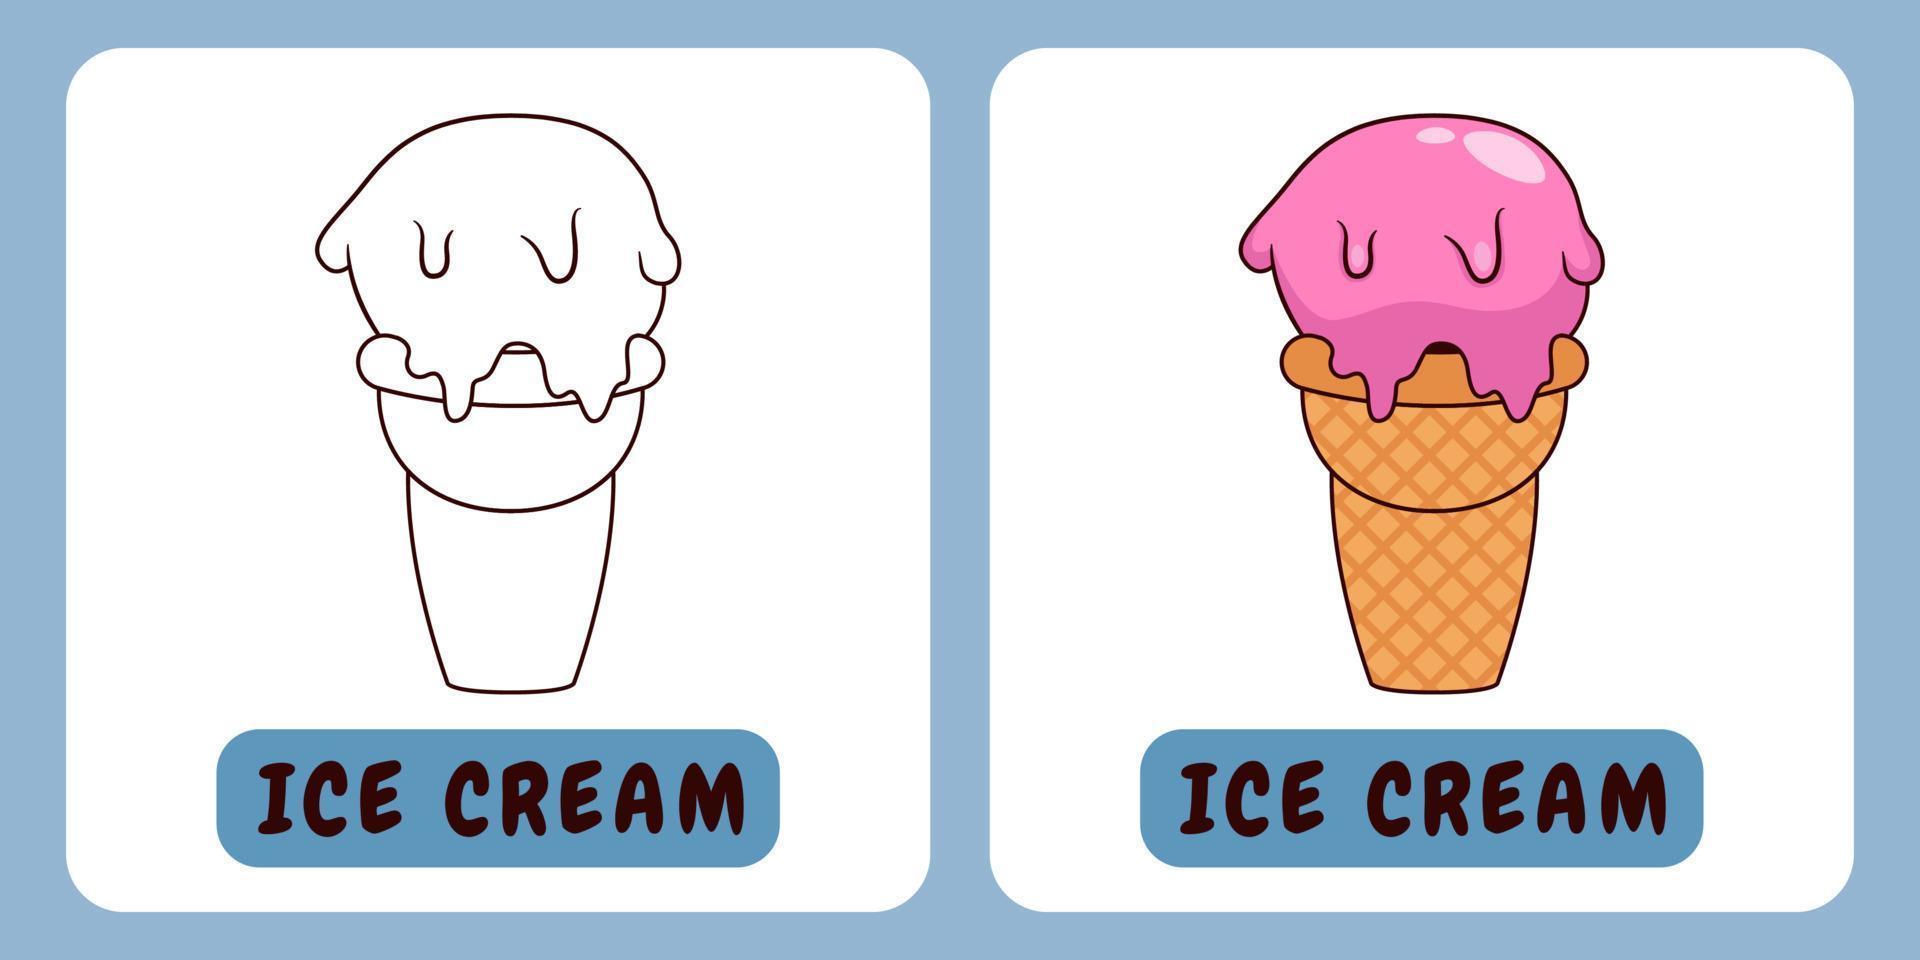 Ice Cream cartoon illustration for children's coloring book vector